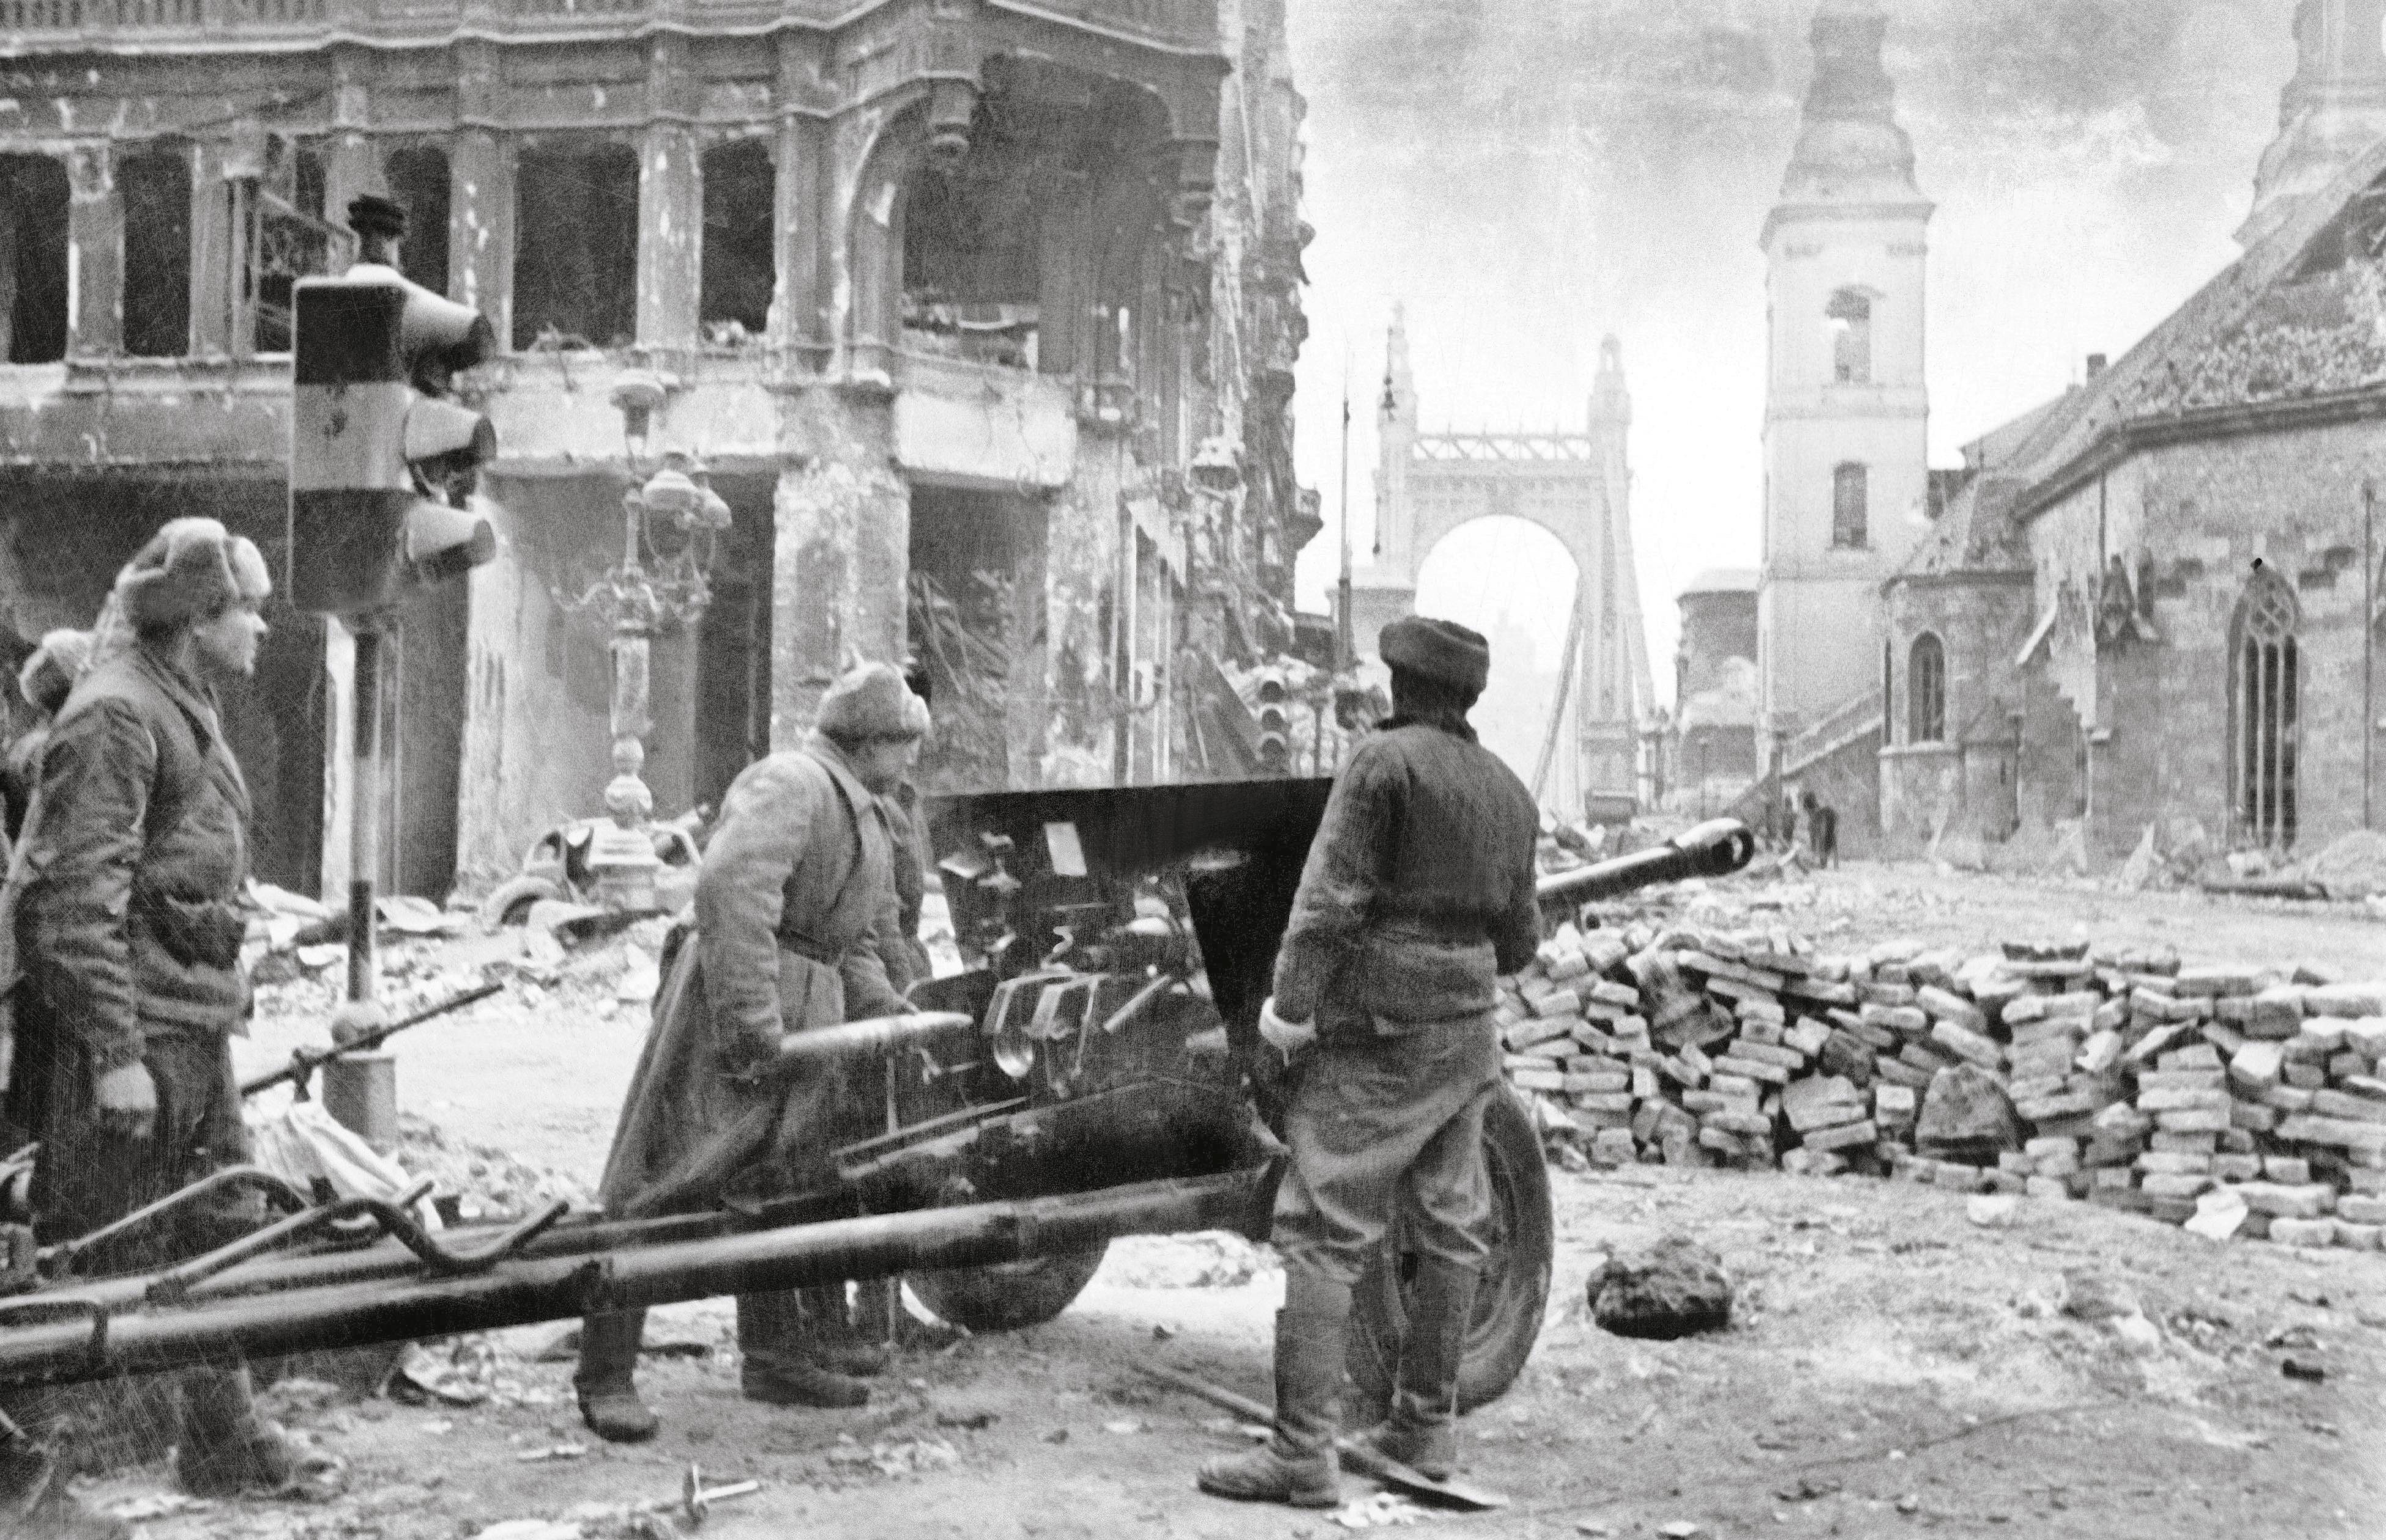 Sowiecka artyleria na ulicach Budapesztu, luty 1945 r.